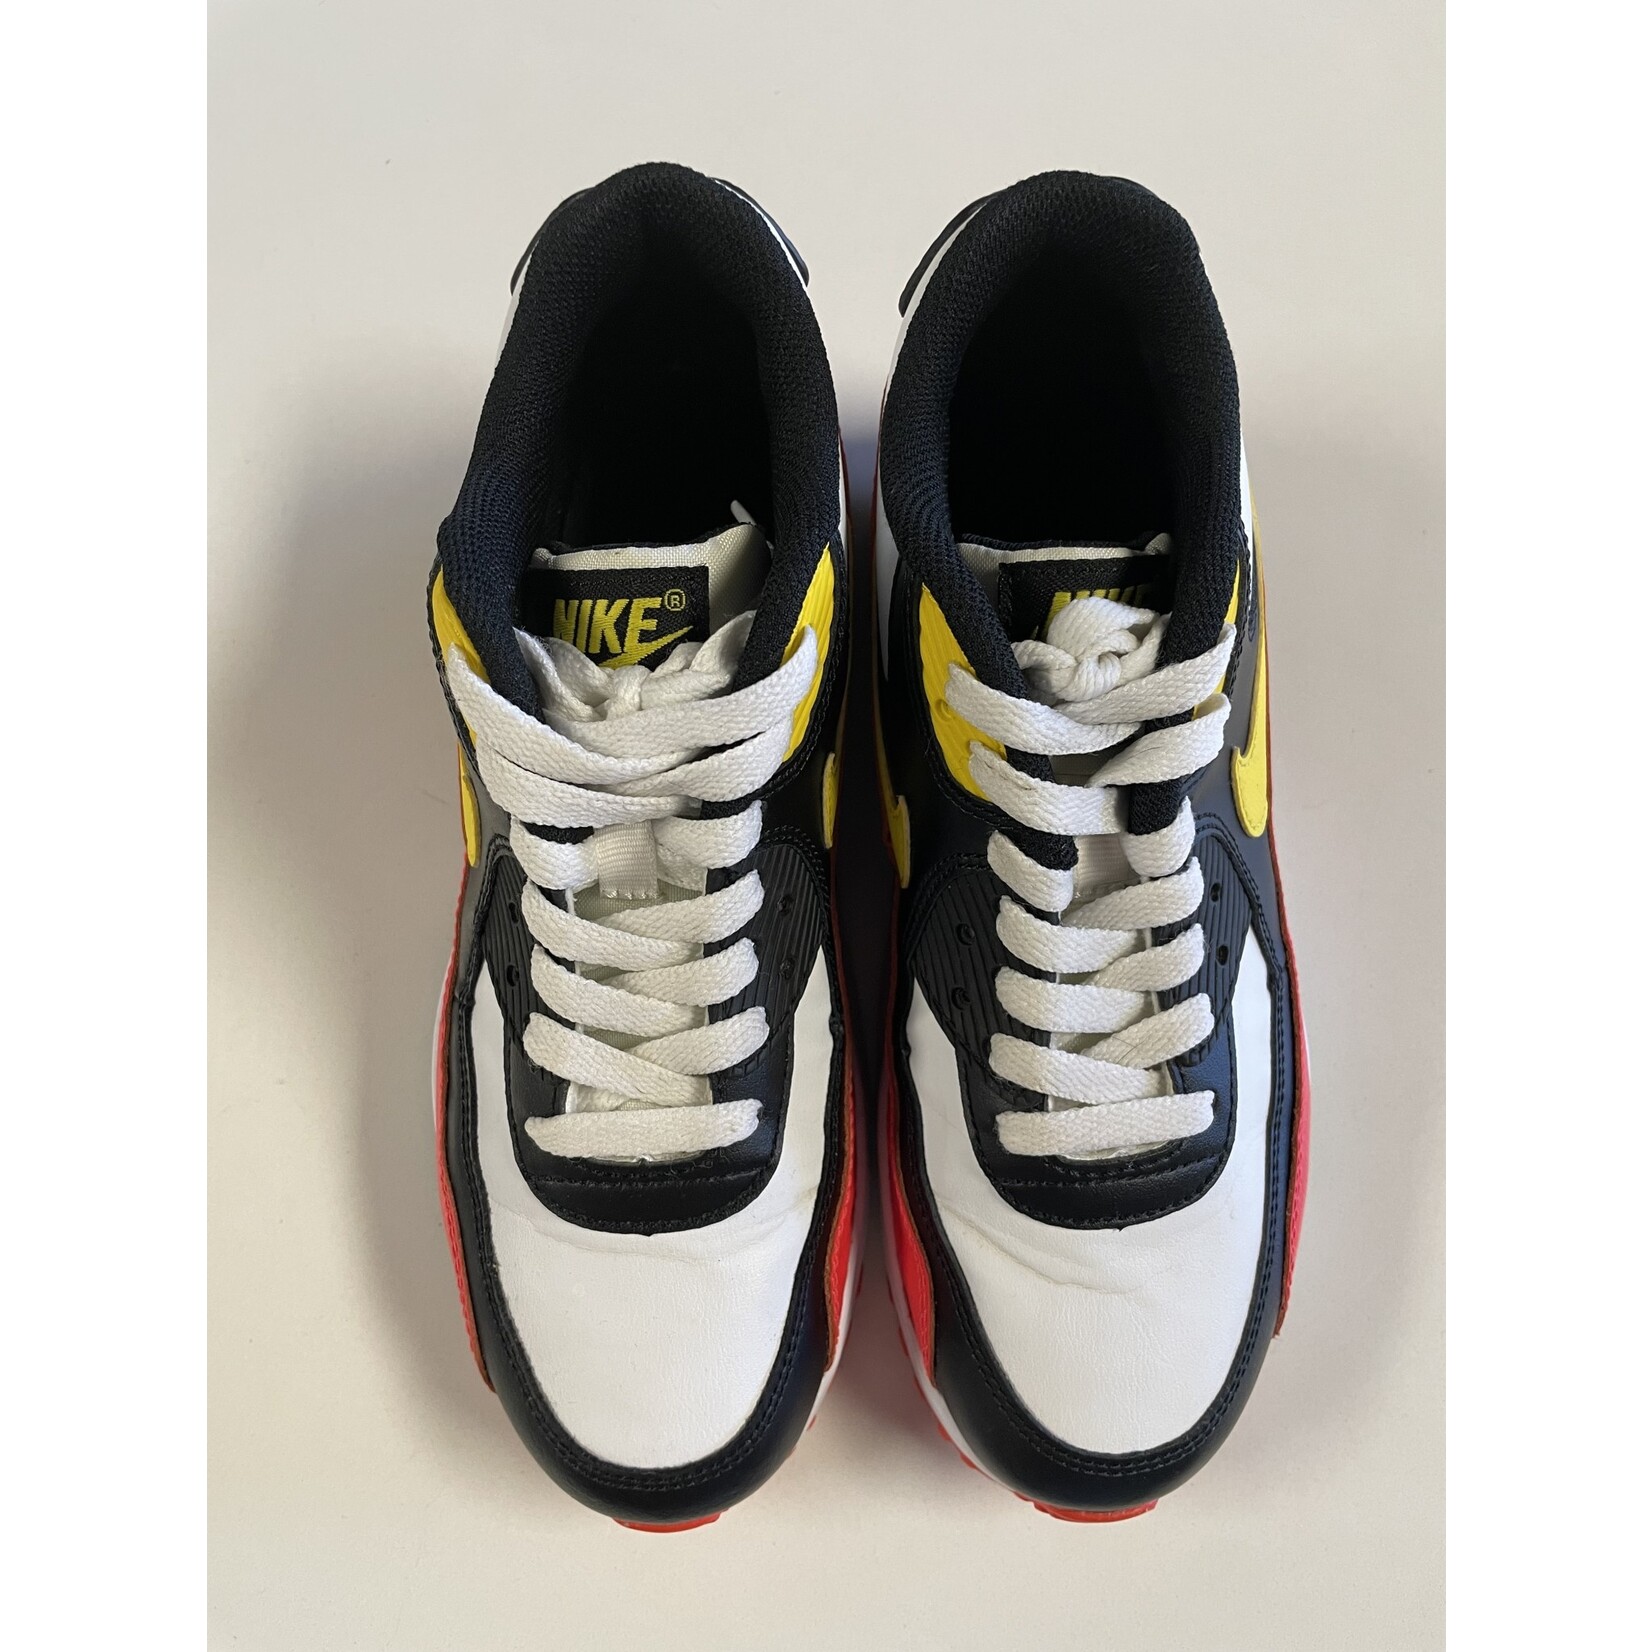 Nike, Air Max 90, Yellow, Black, Crimson, 5 Youth